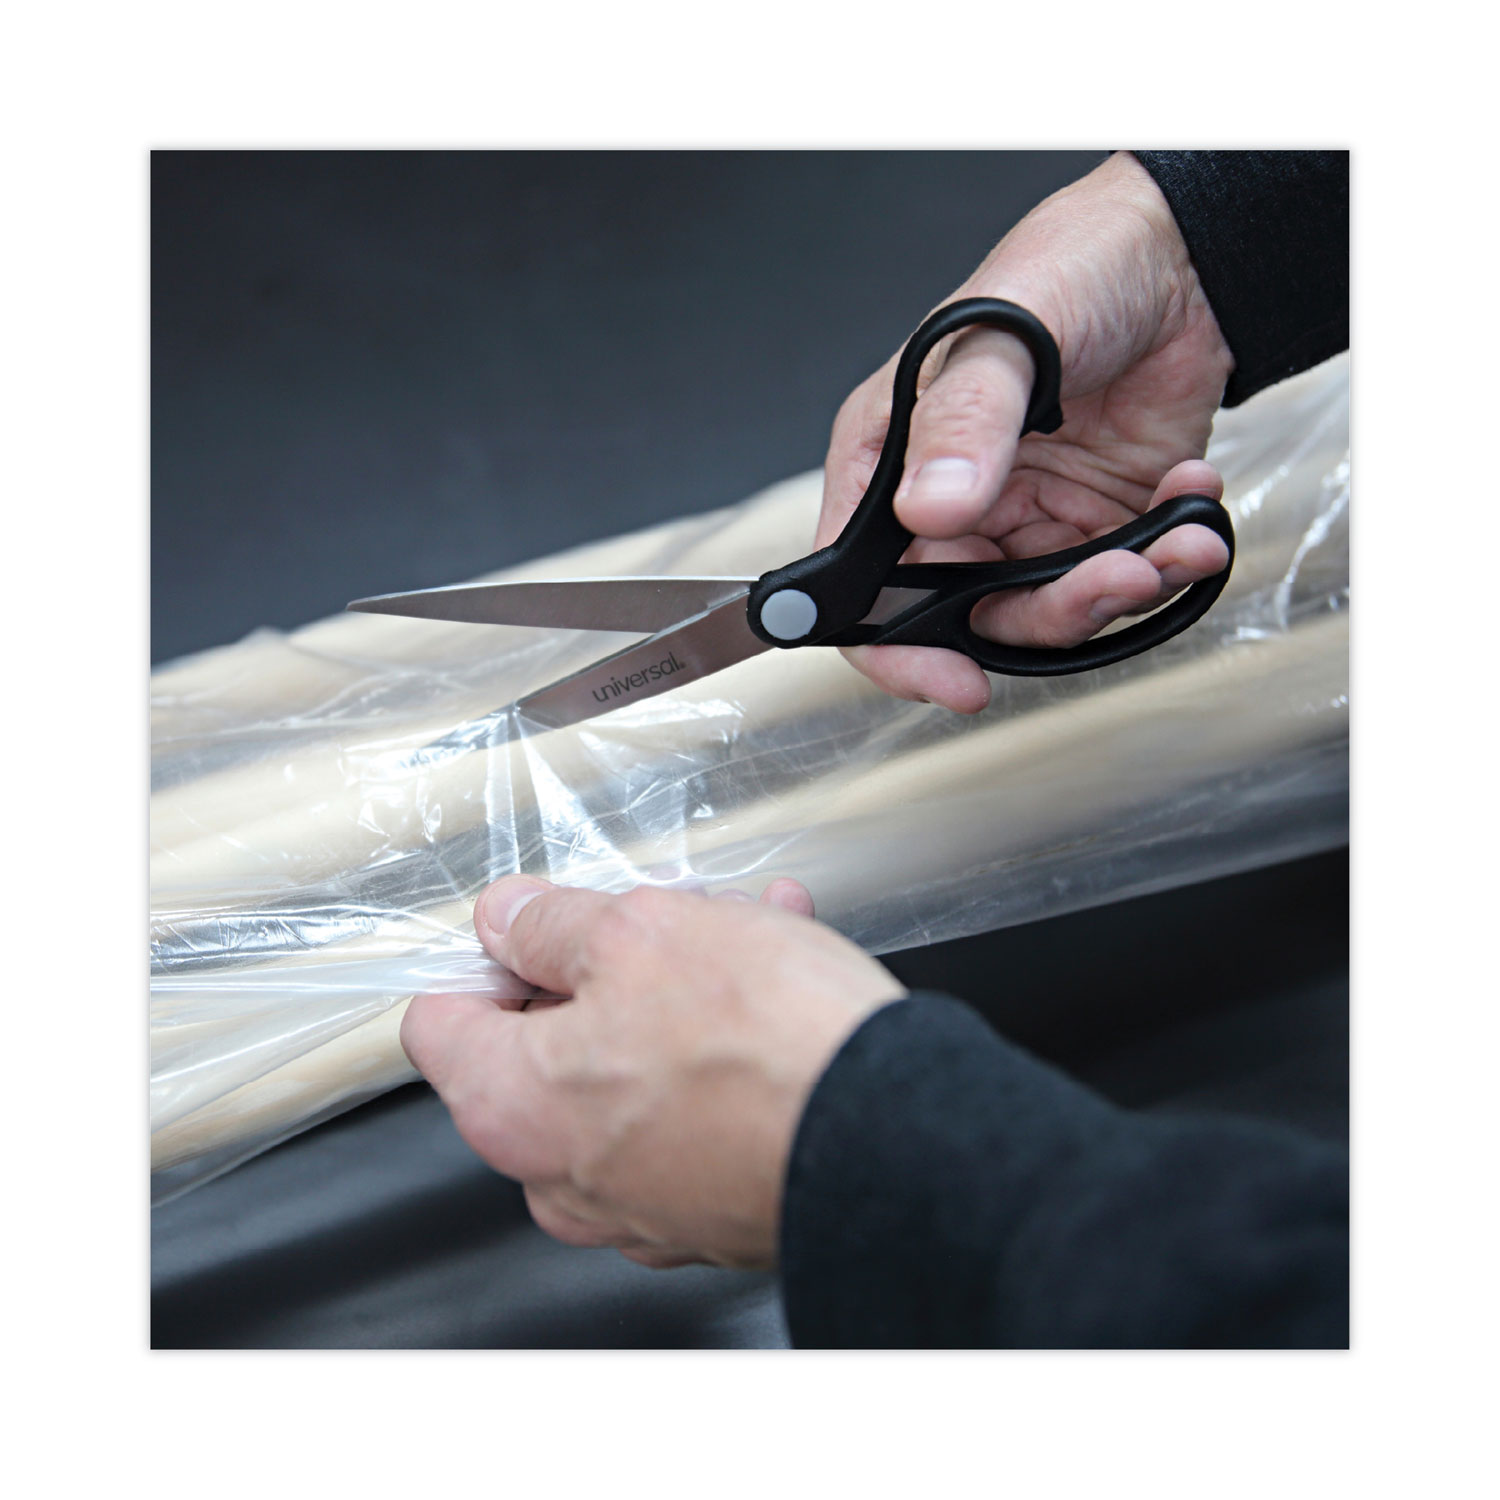 Stainless Steel Office Scissors, 8.5 Long, 3.75 Cut Length, Black Offset  Handle - Zerbee